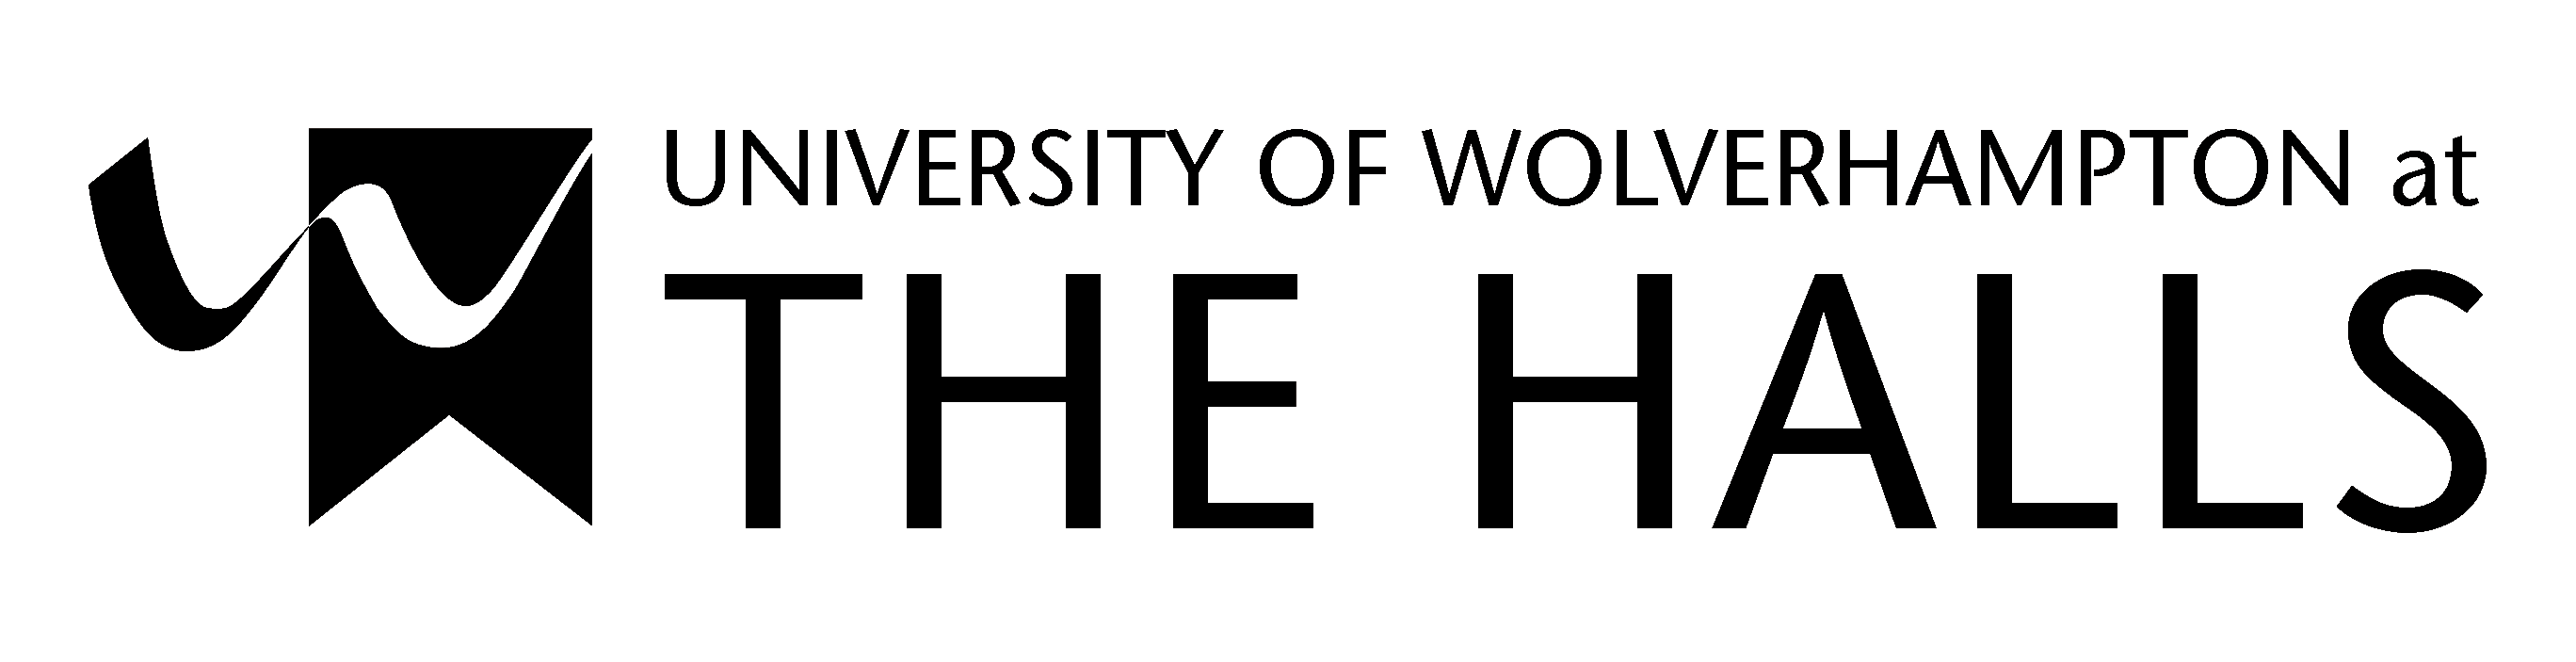 University of Wolverhampton at The Halls brand logo